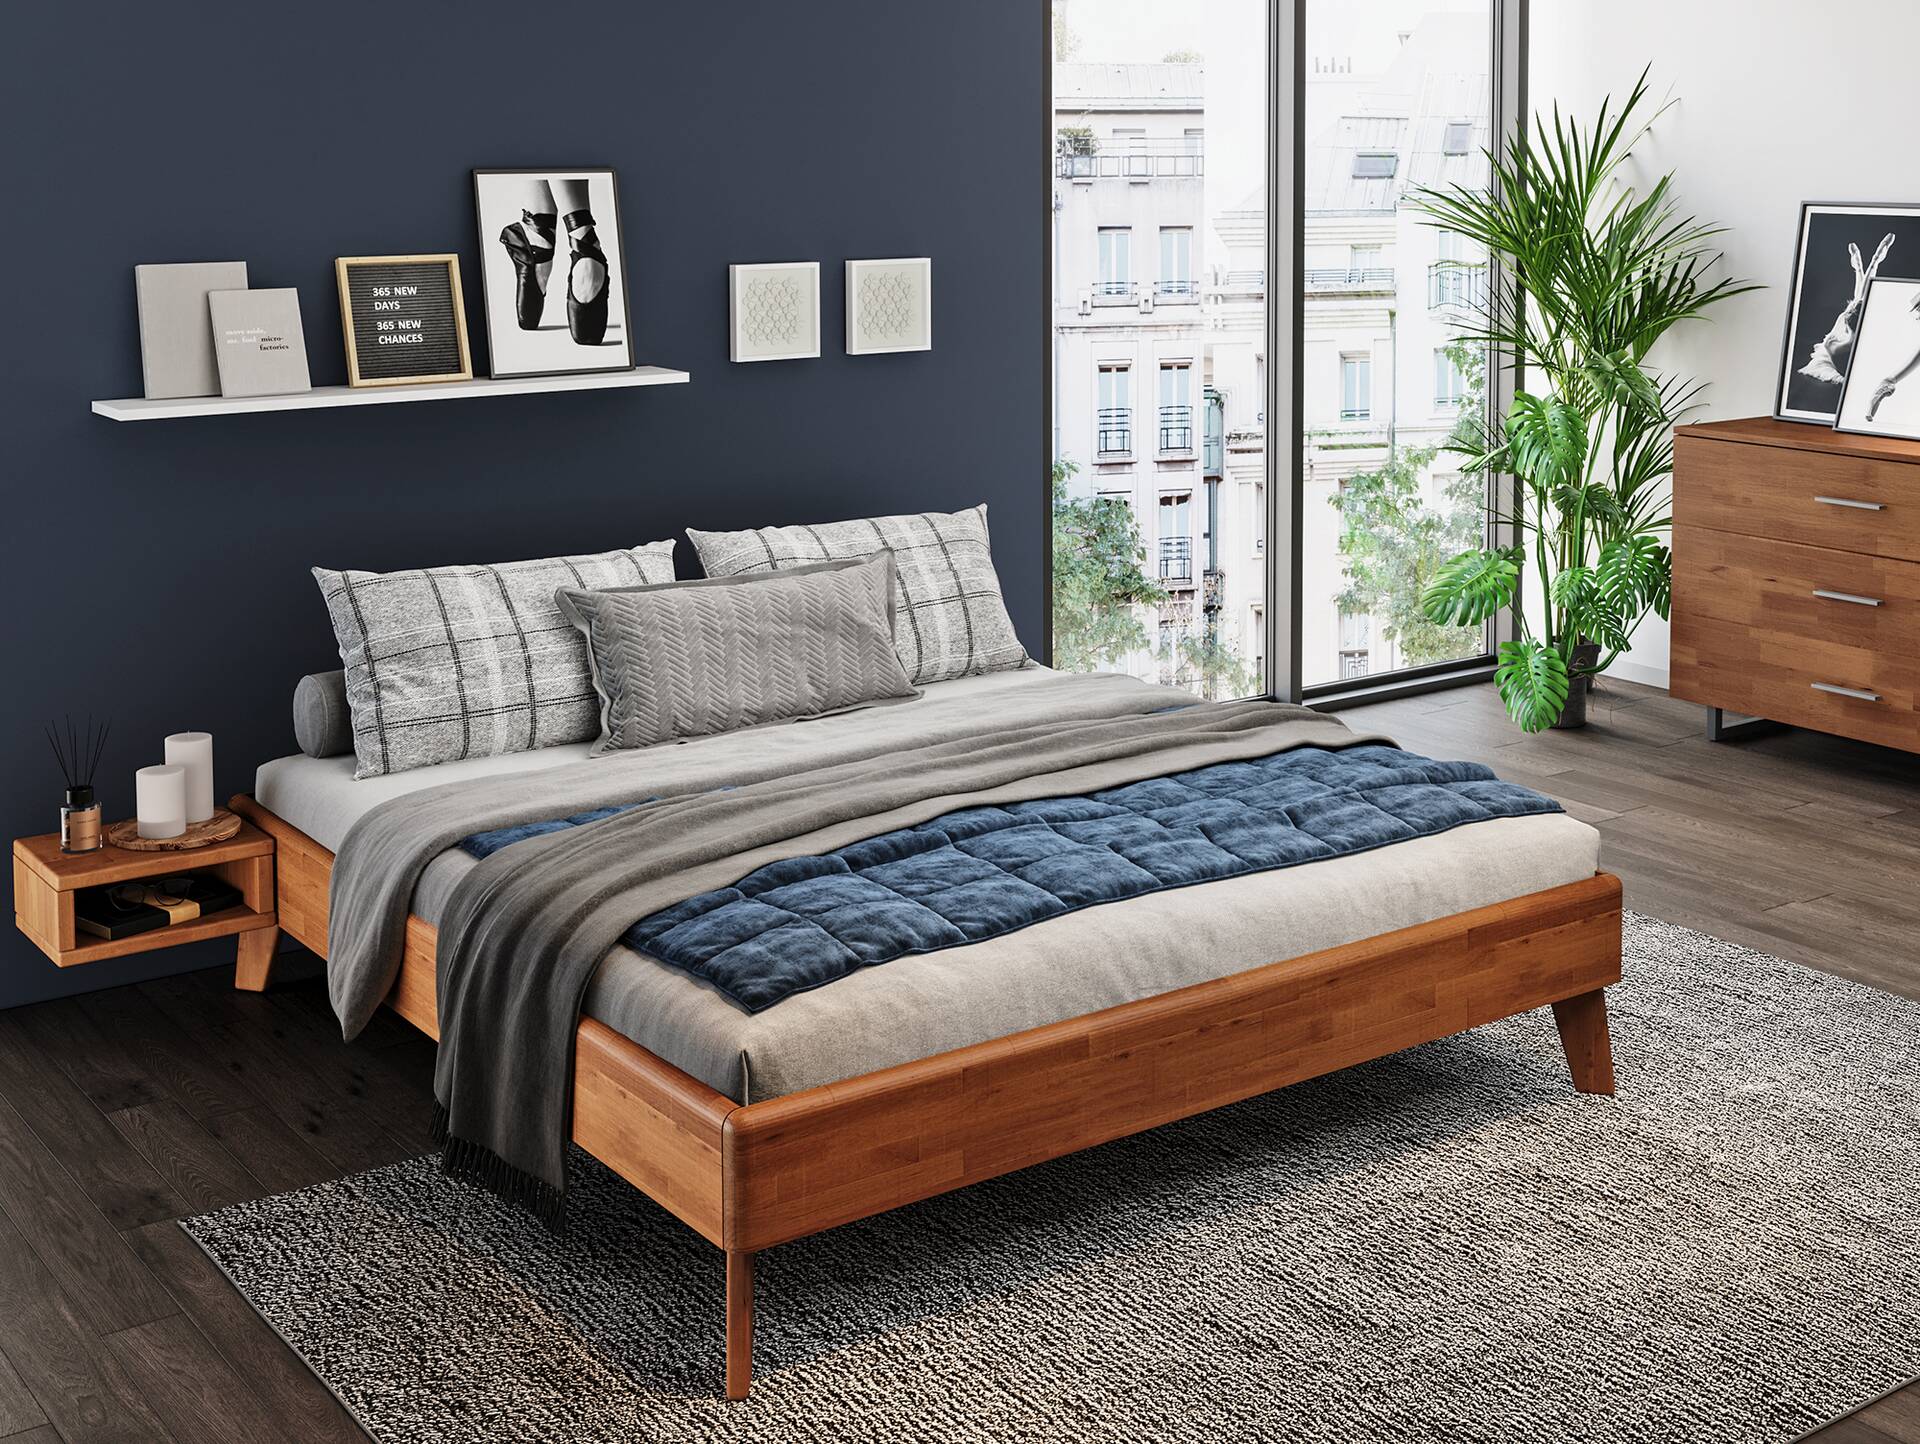 CALIDO 4-Fuß-Bett ohne Kopfteil, Material Massivholz 90 x 200 cm | Buche nussbaumfarbig gedämpft | Standardhöhe